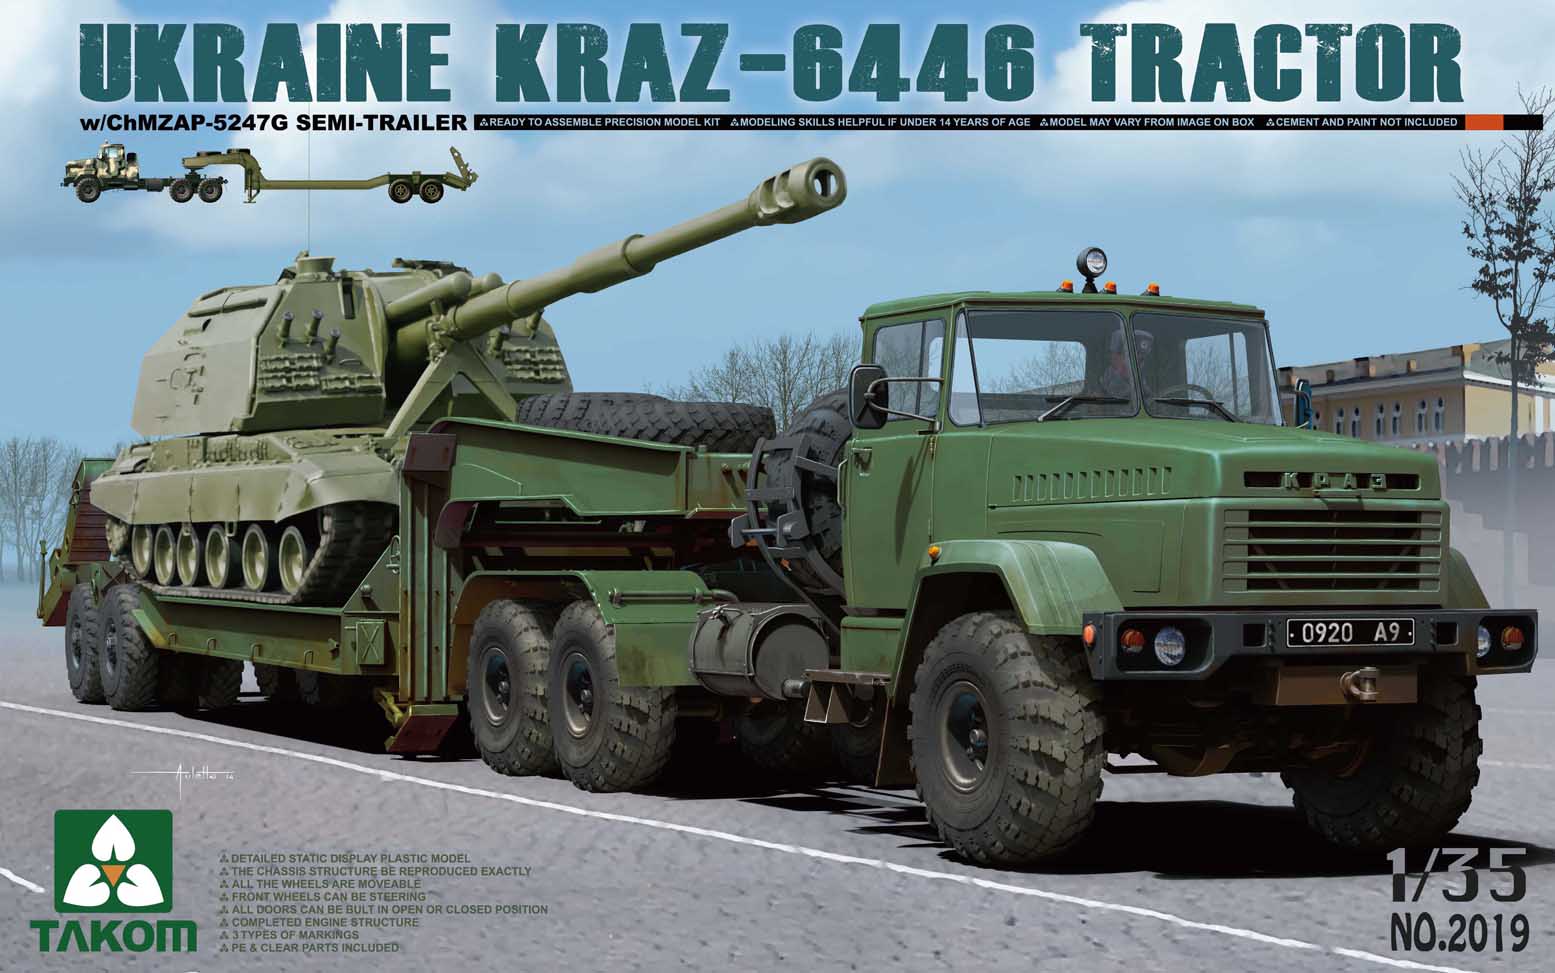 Ukraine KrAZ-6446 Tractor w/ChMZAP-5247G Semi-trailer